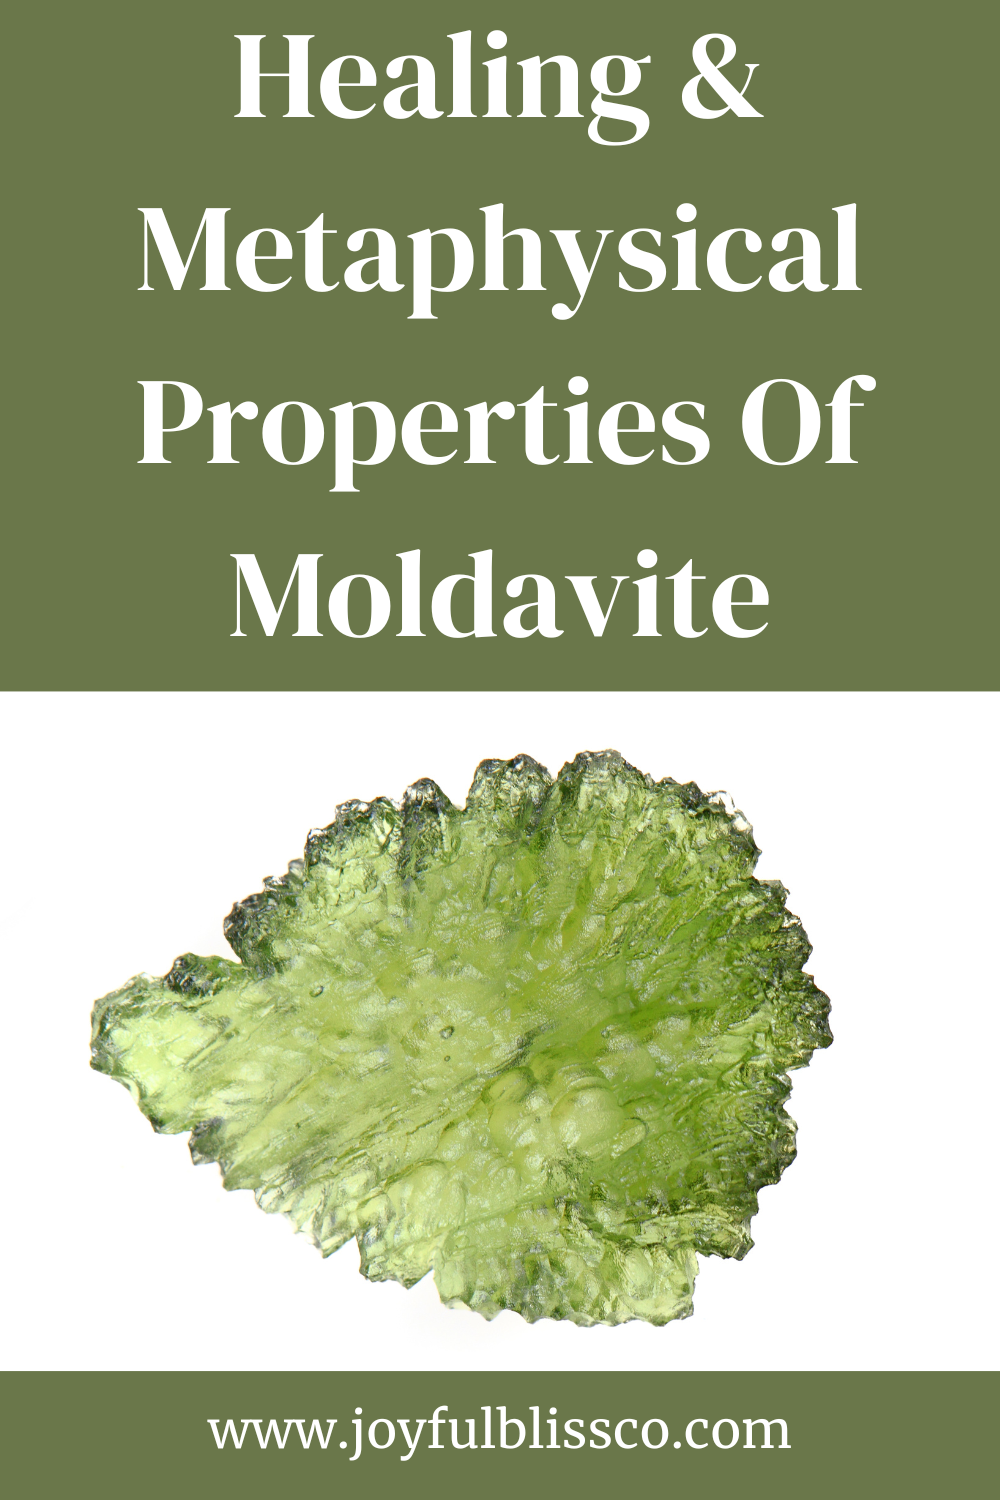 The Healing & Metaphysical Properties Of Moldavite